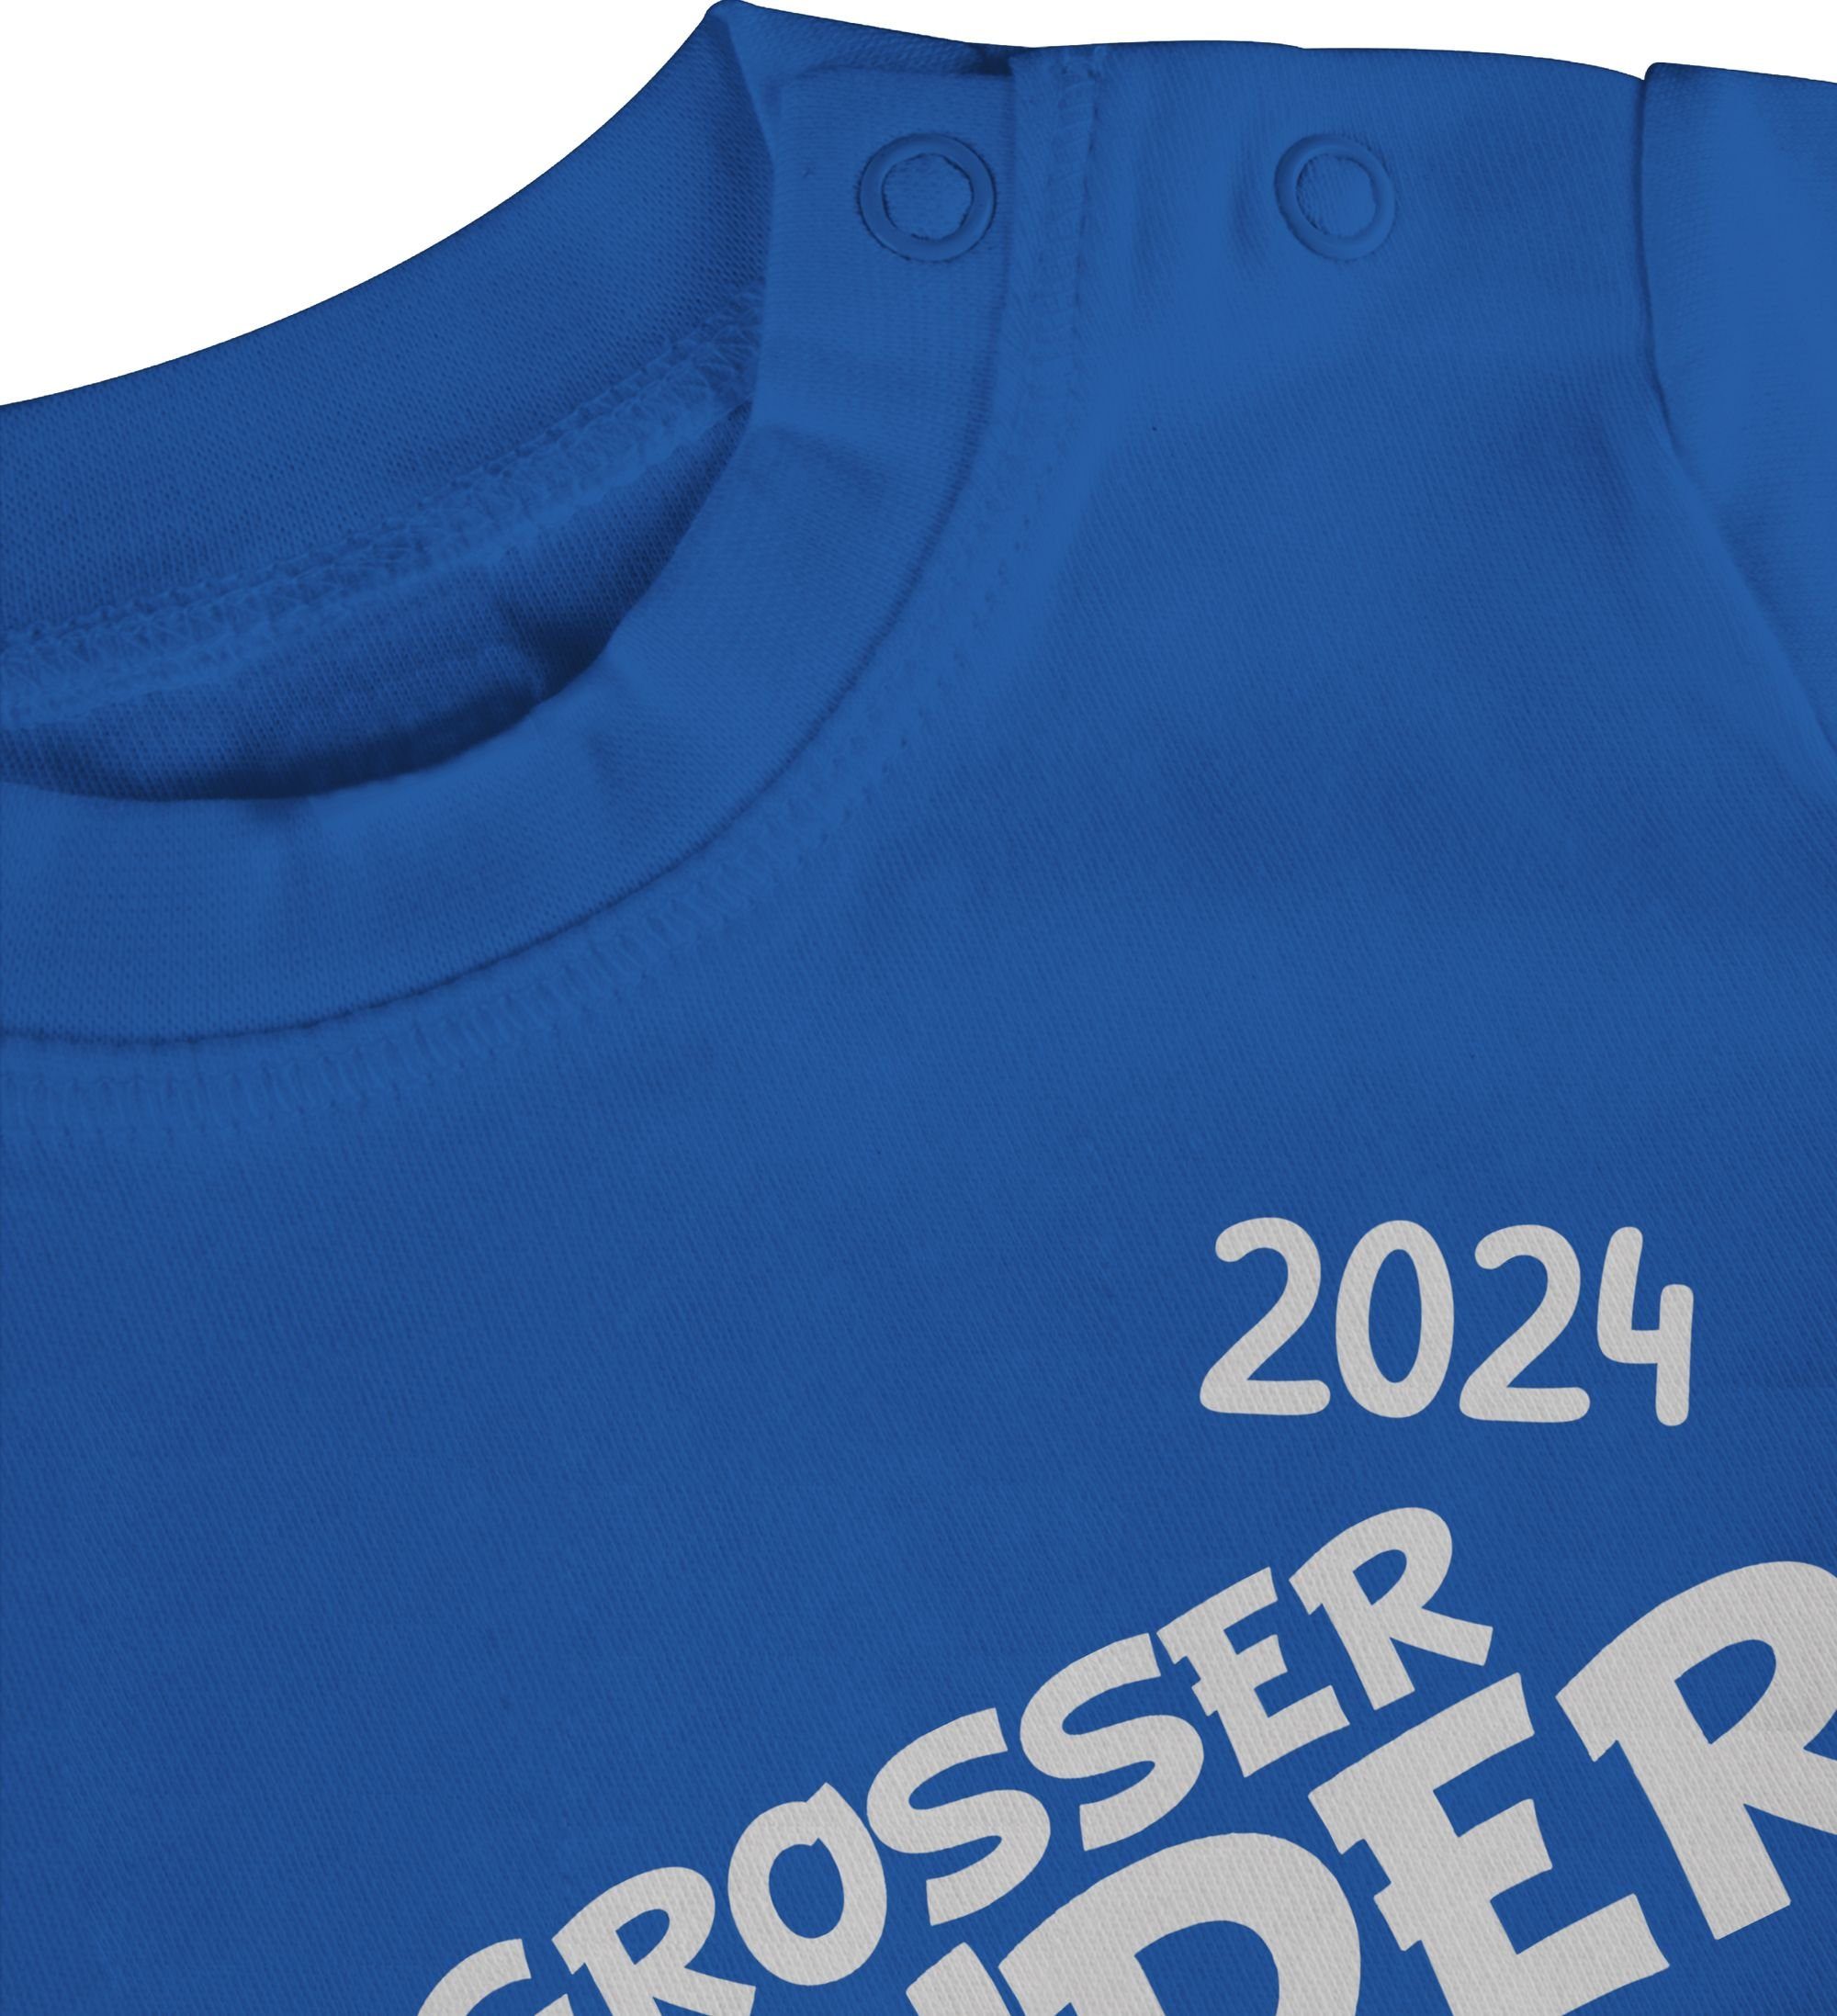 loading Bruder Shirtracer 2024 Großer Bruder 2 Großer T-Shirt Royalblau